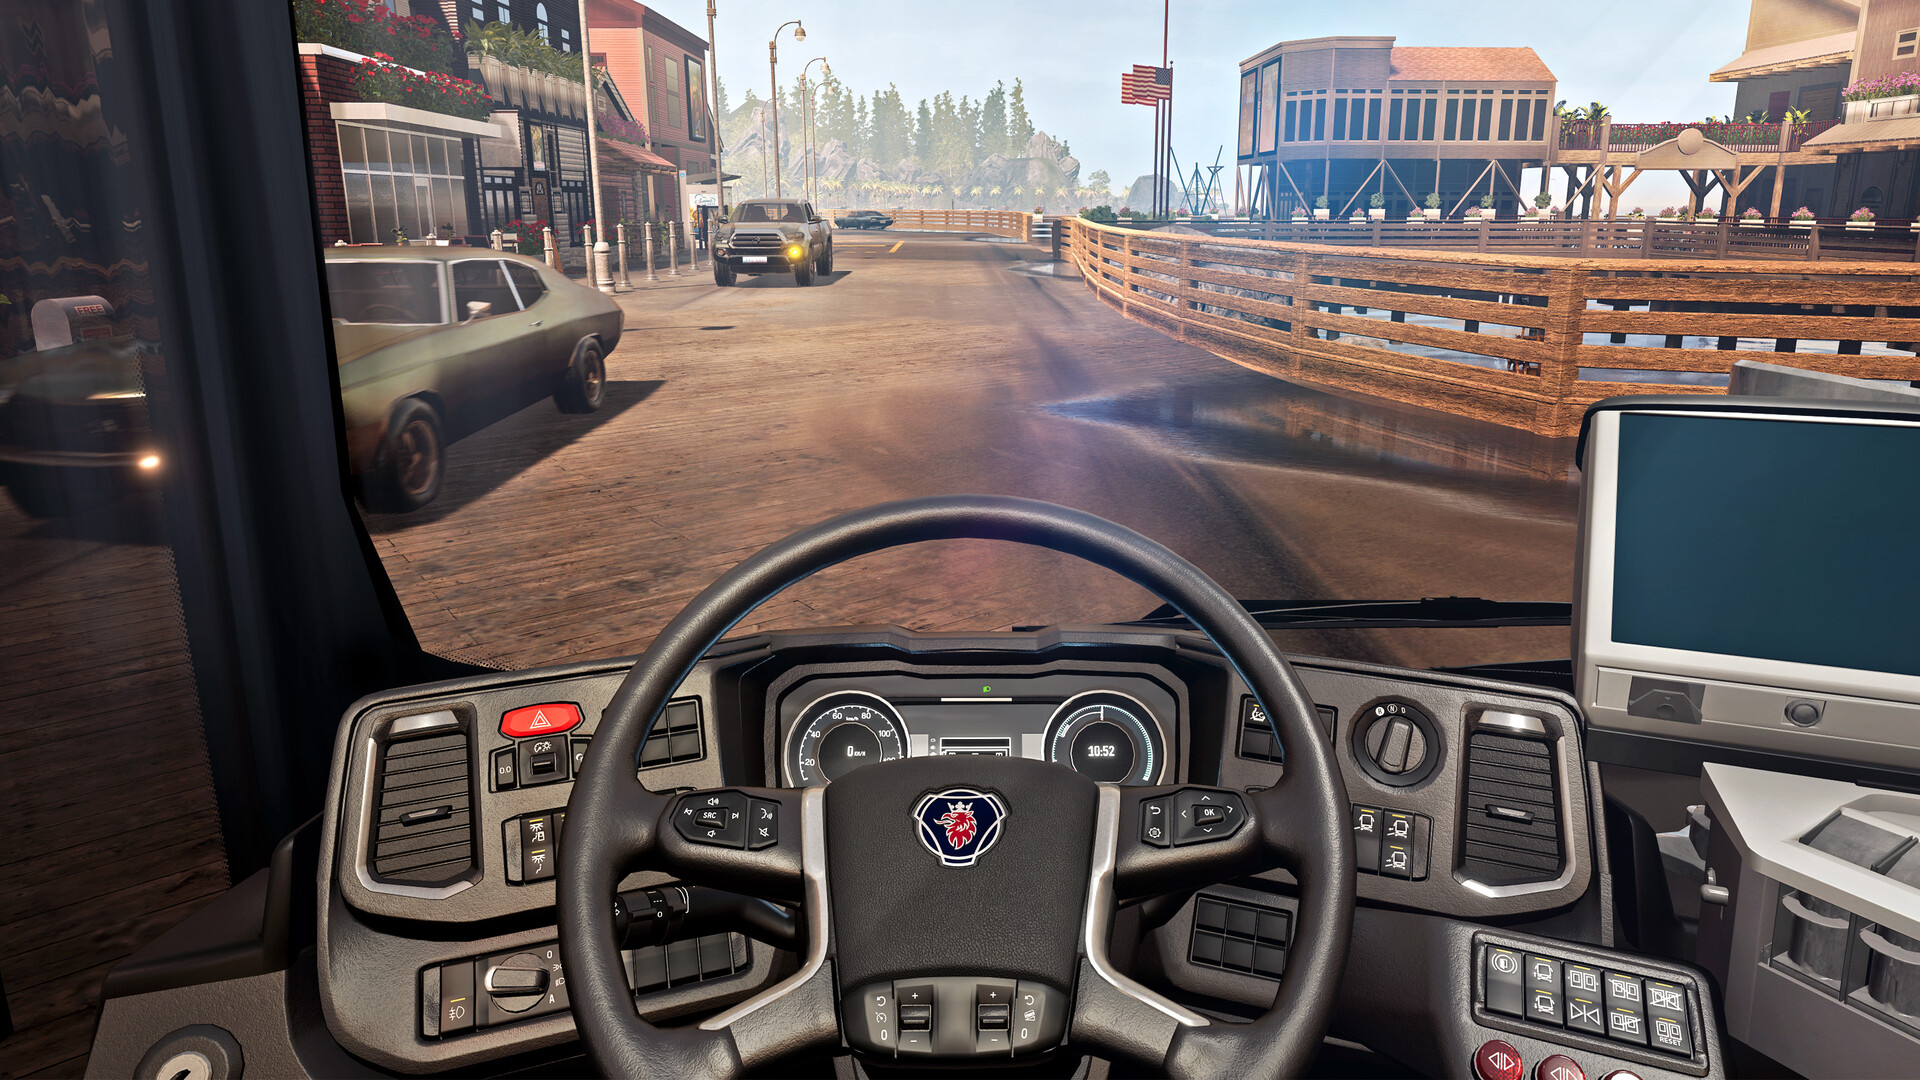 Bus Simulator 21 on Steam